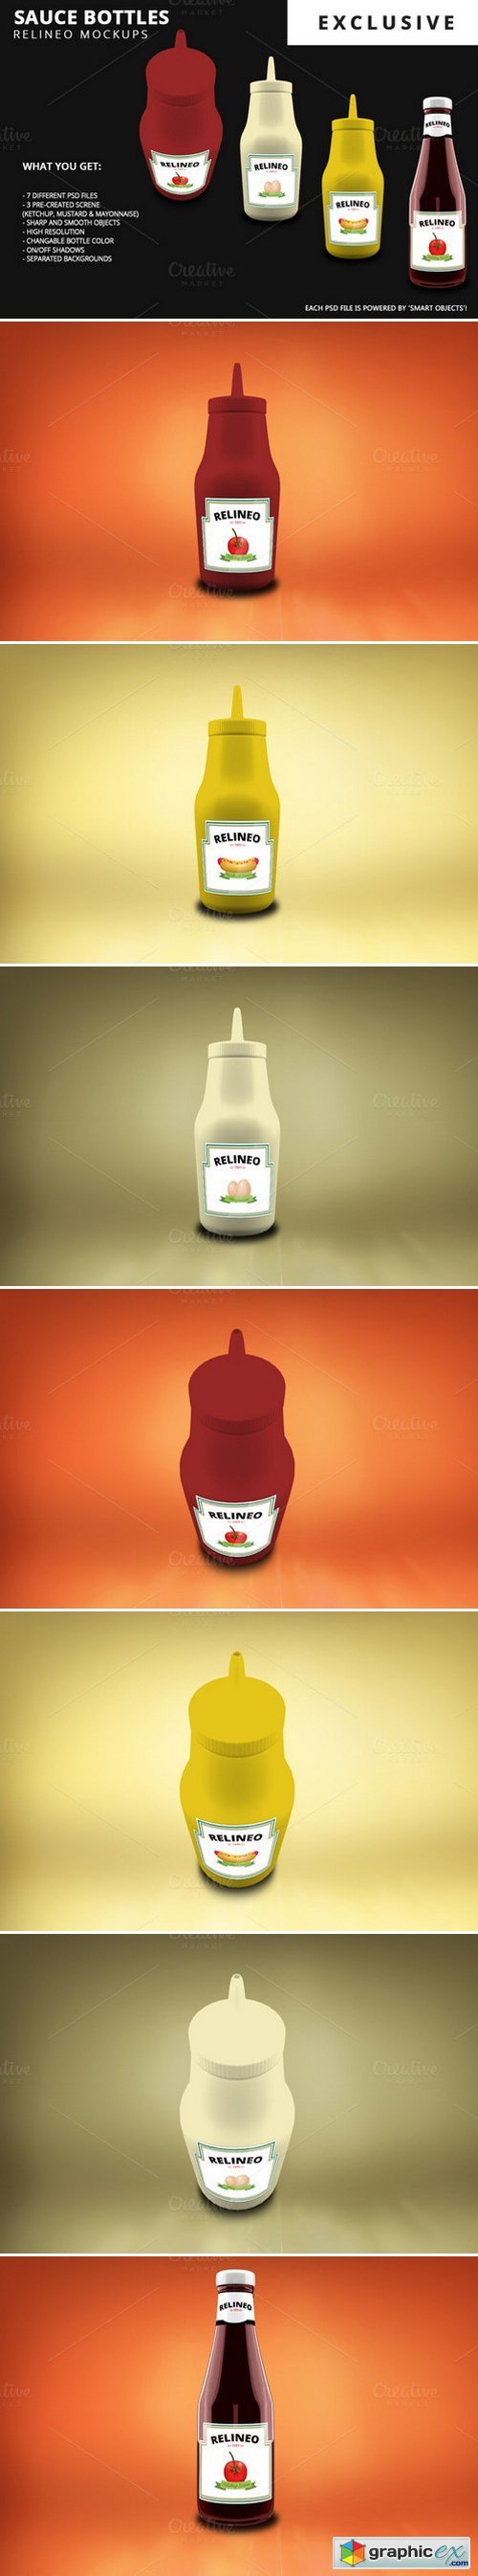 Sauce Bottles Mockup Pack